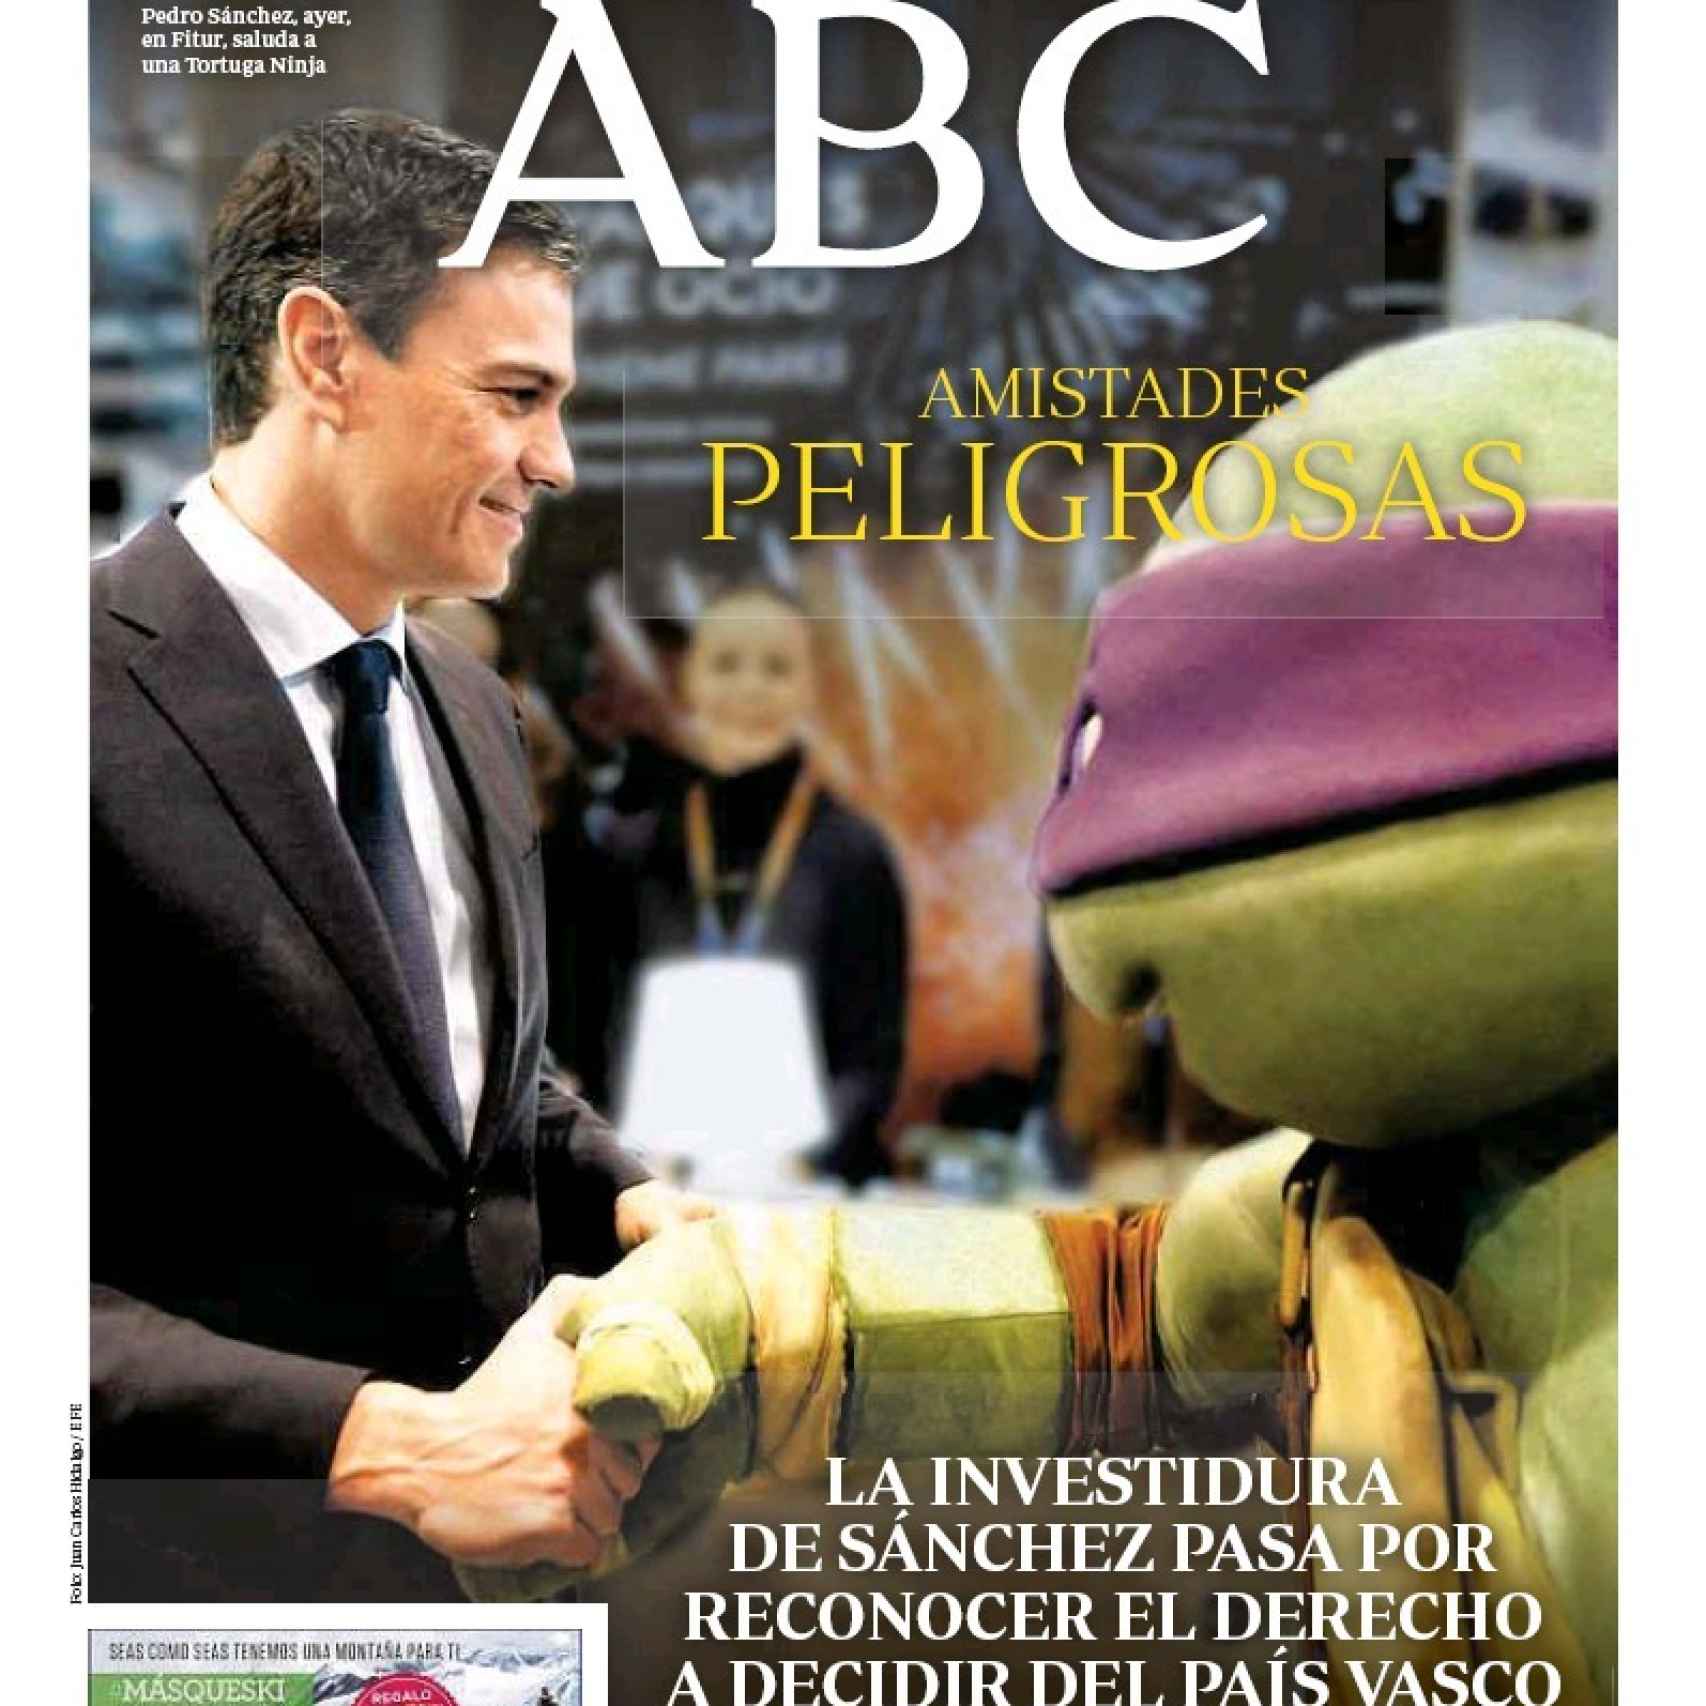 La portada del diario ABC del 22/01/2016